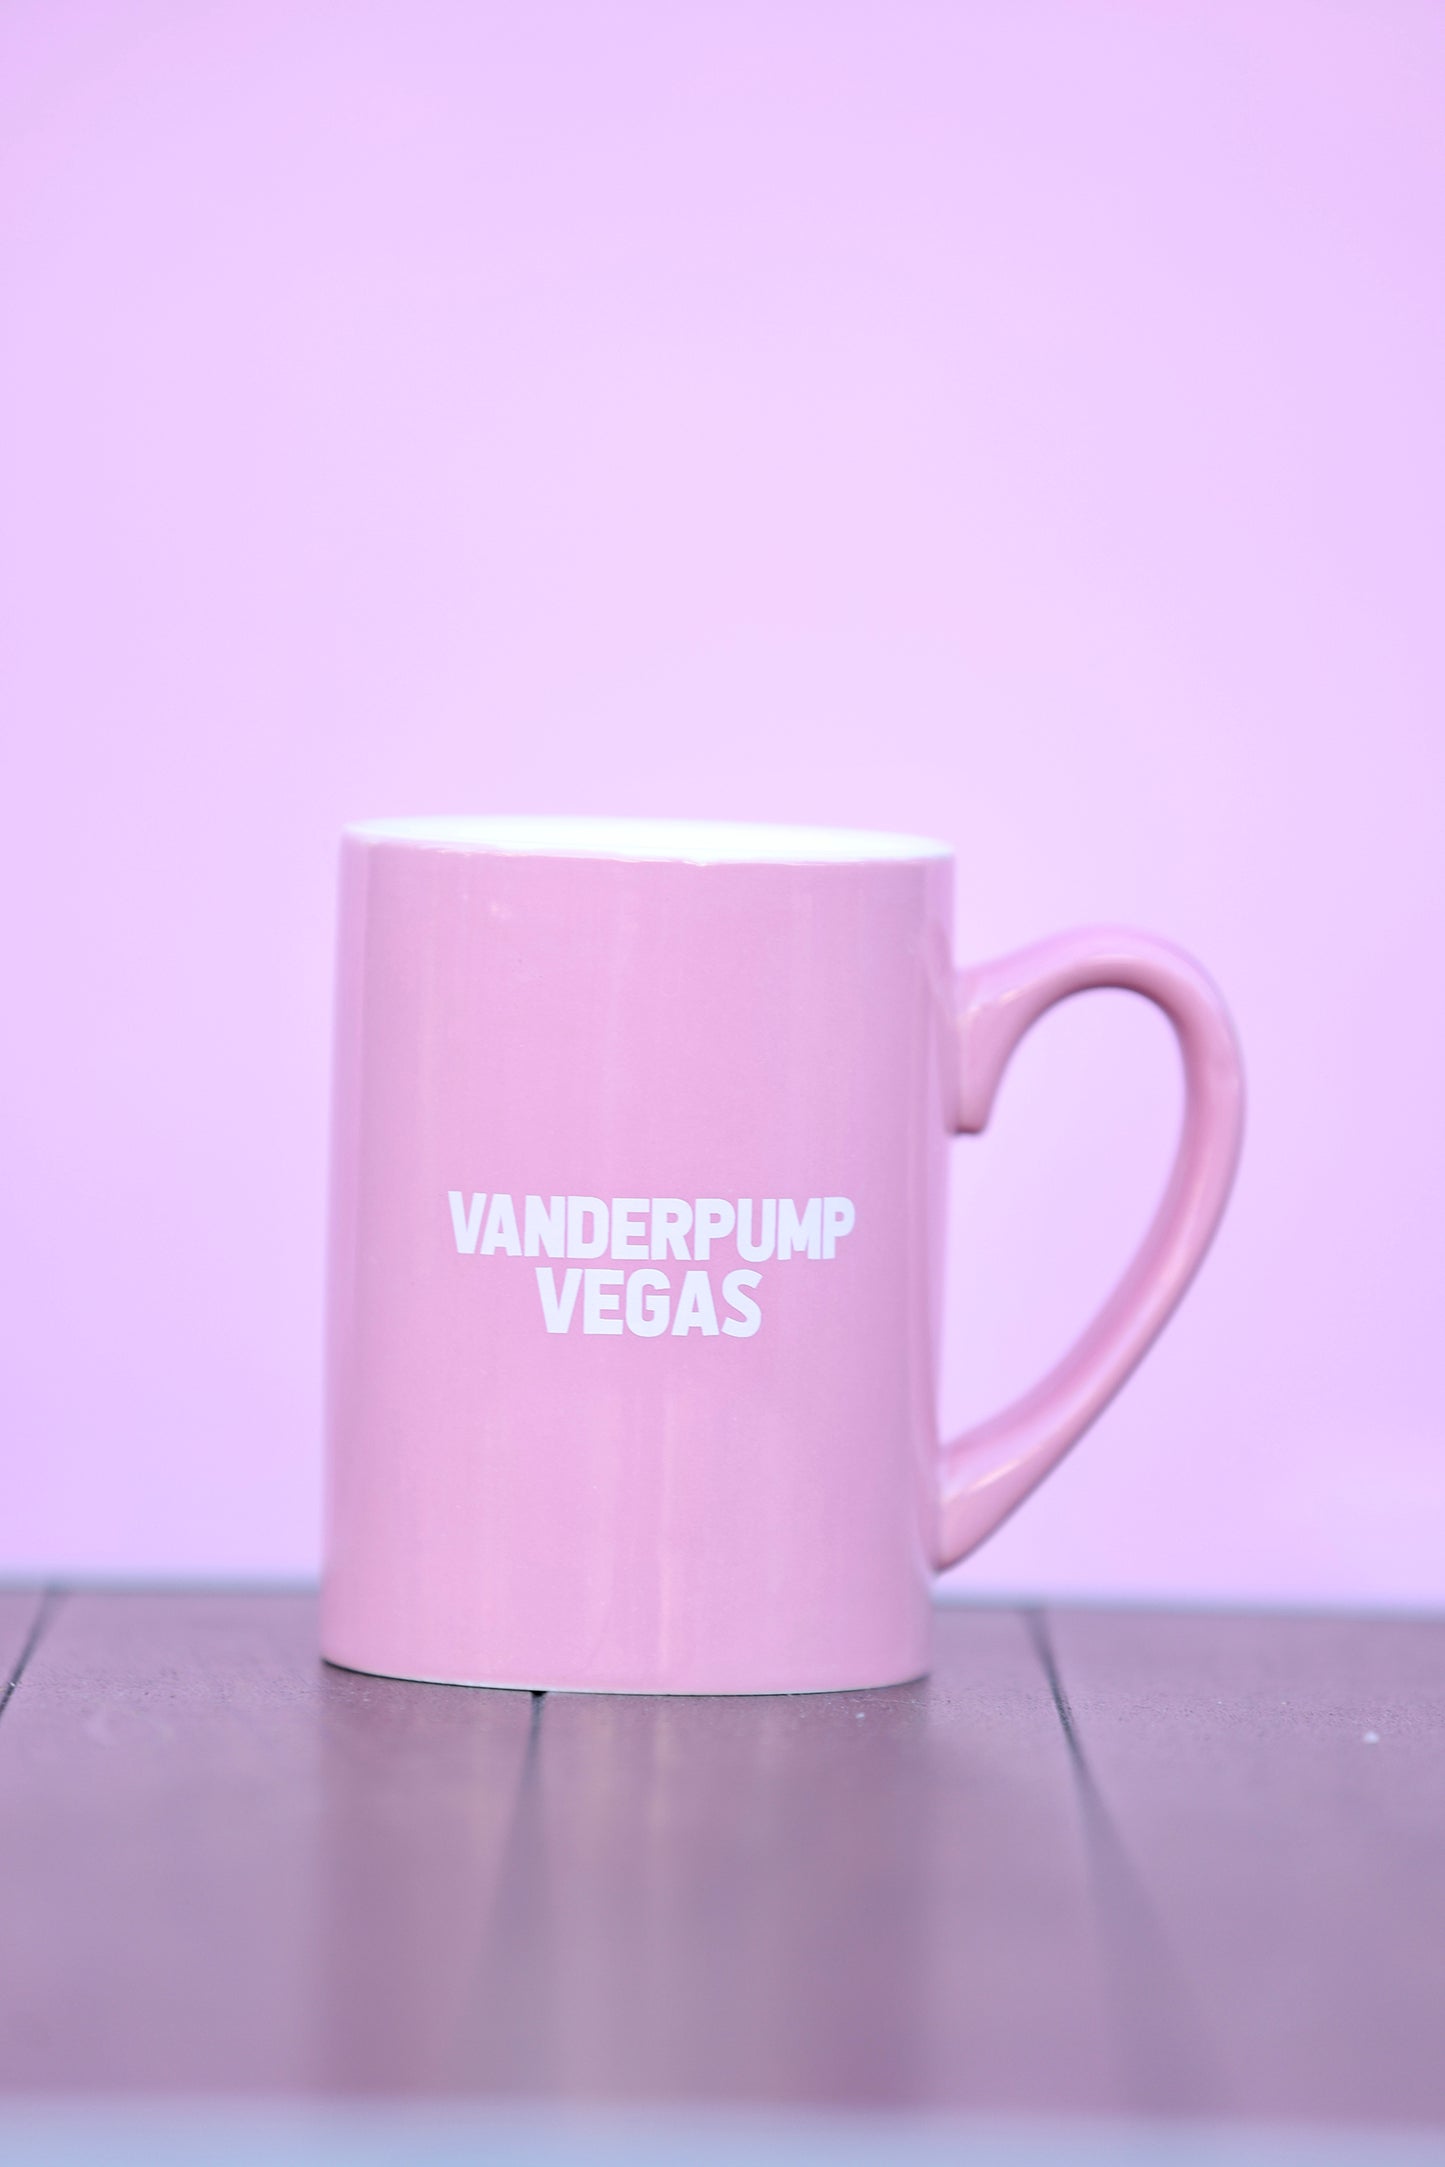 Vanderpump Vegas "Spill the Tea, Darling" Coffee Mug